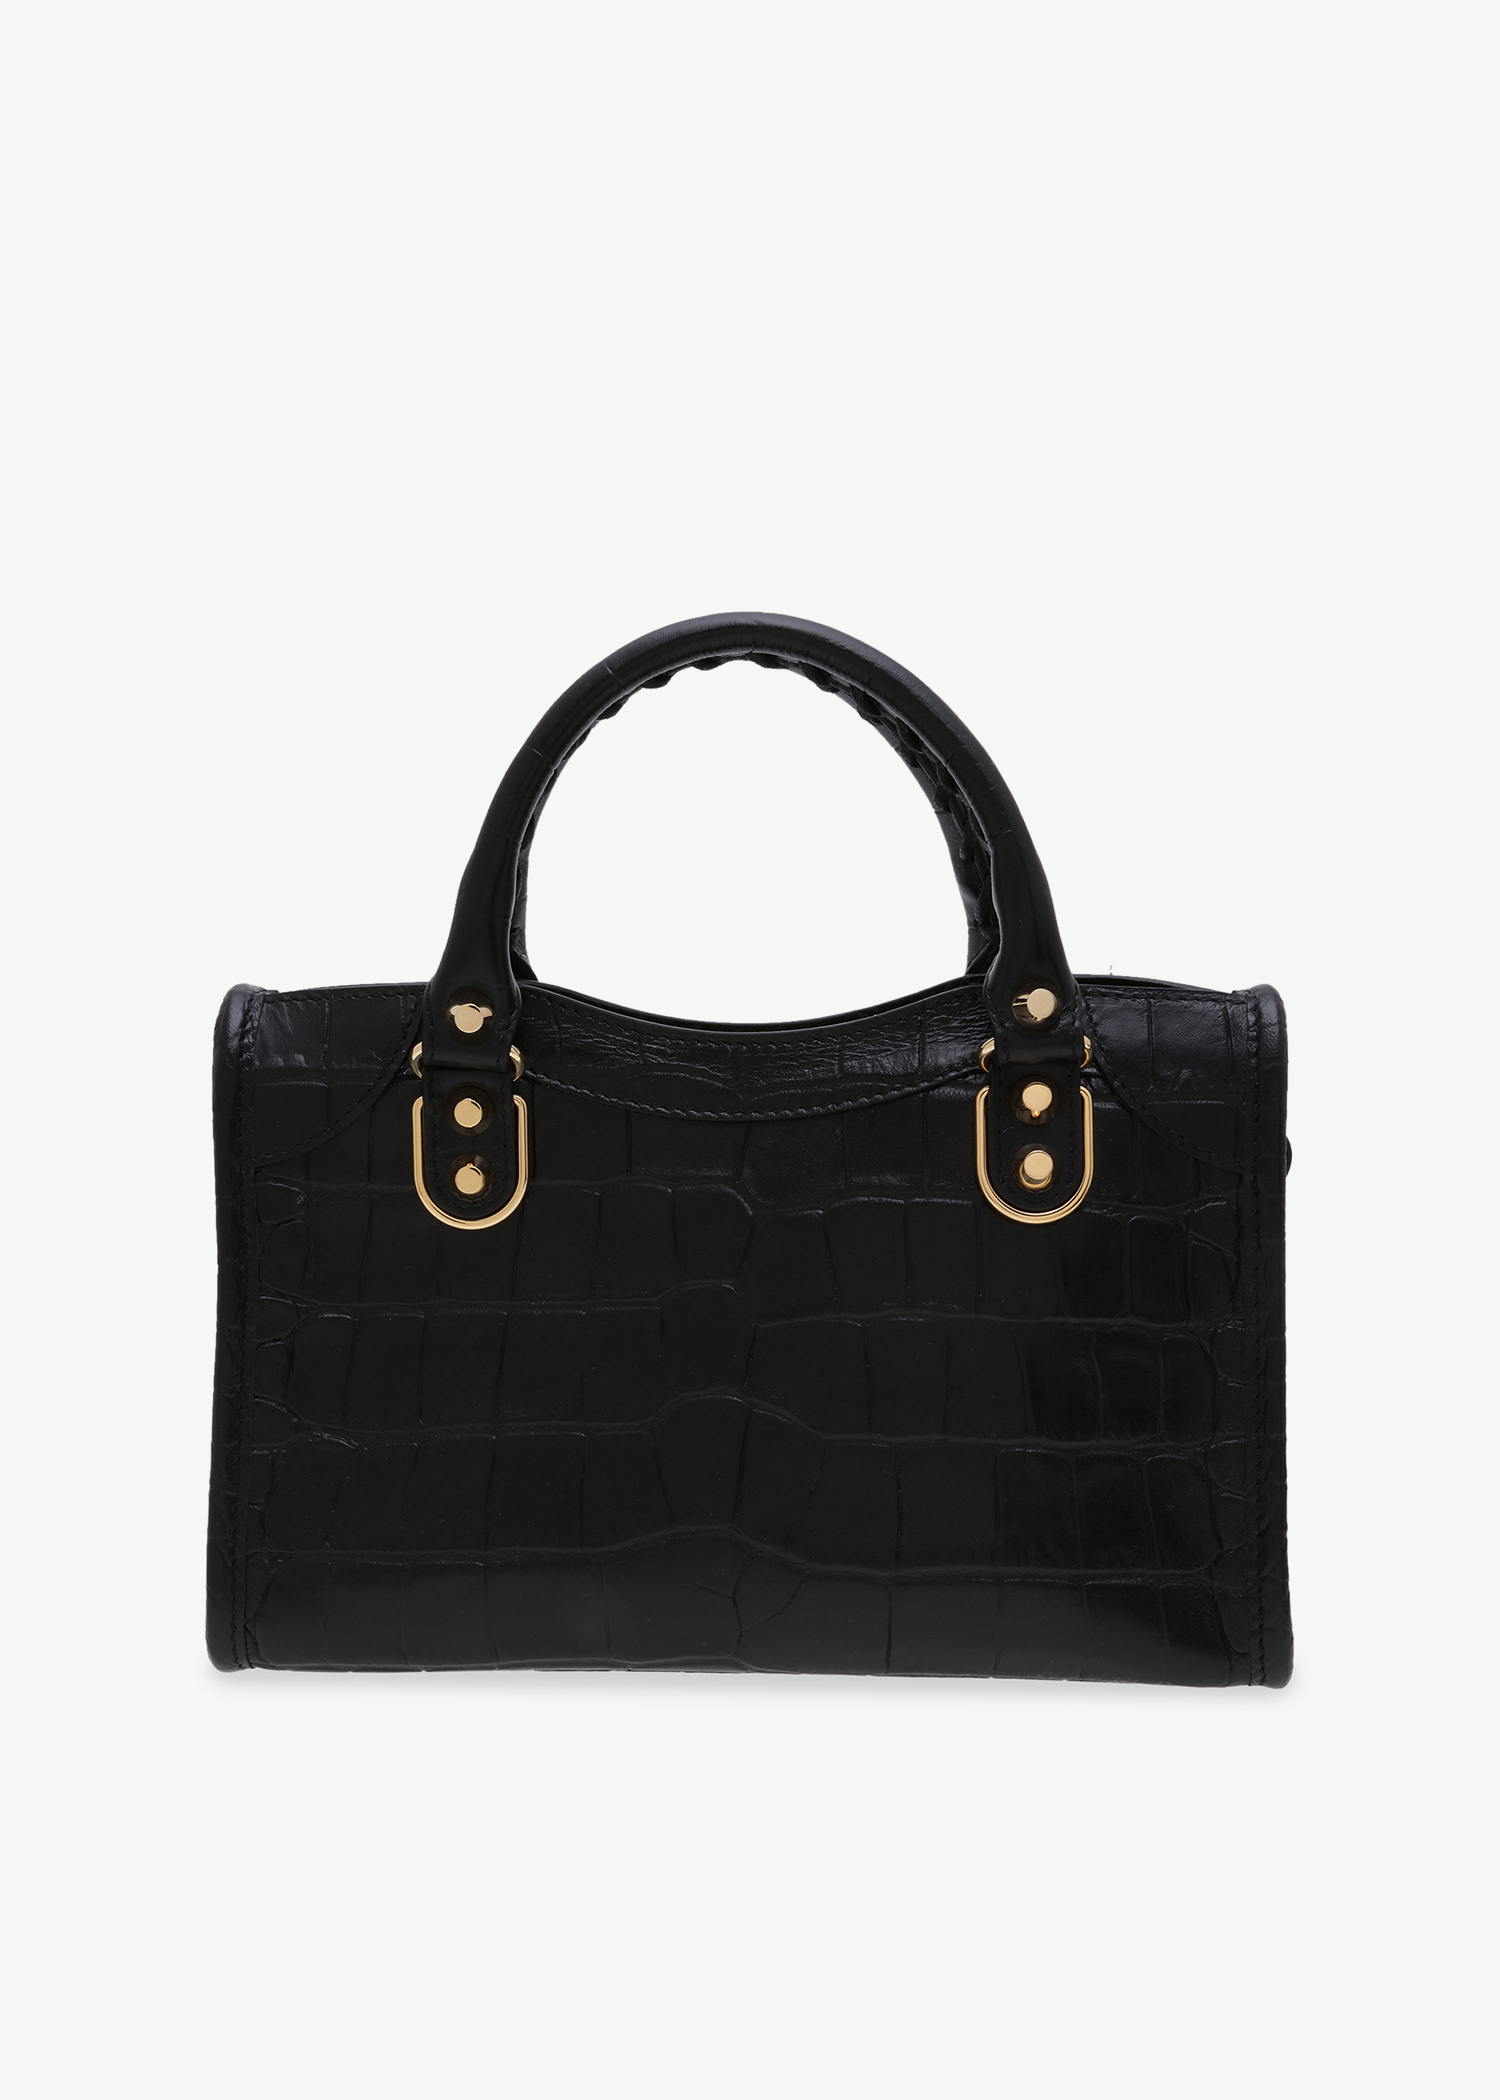 Balenciaga Metallic Edge Mini City bag for Women - Black in UAE 